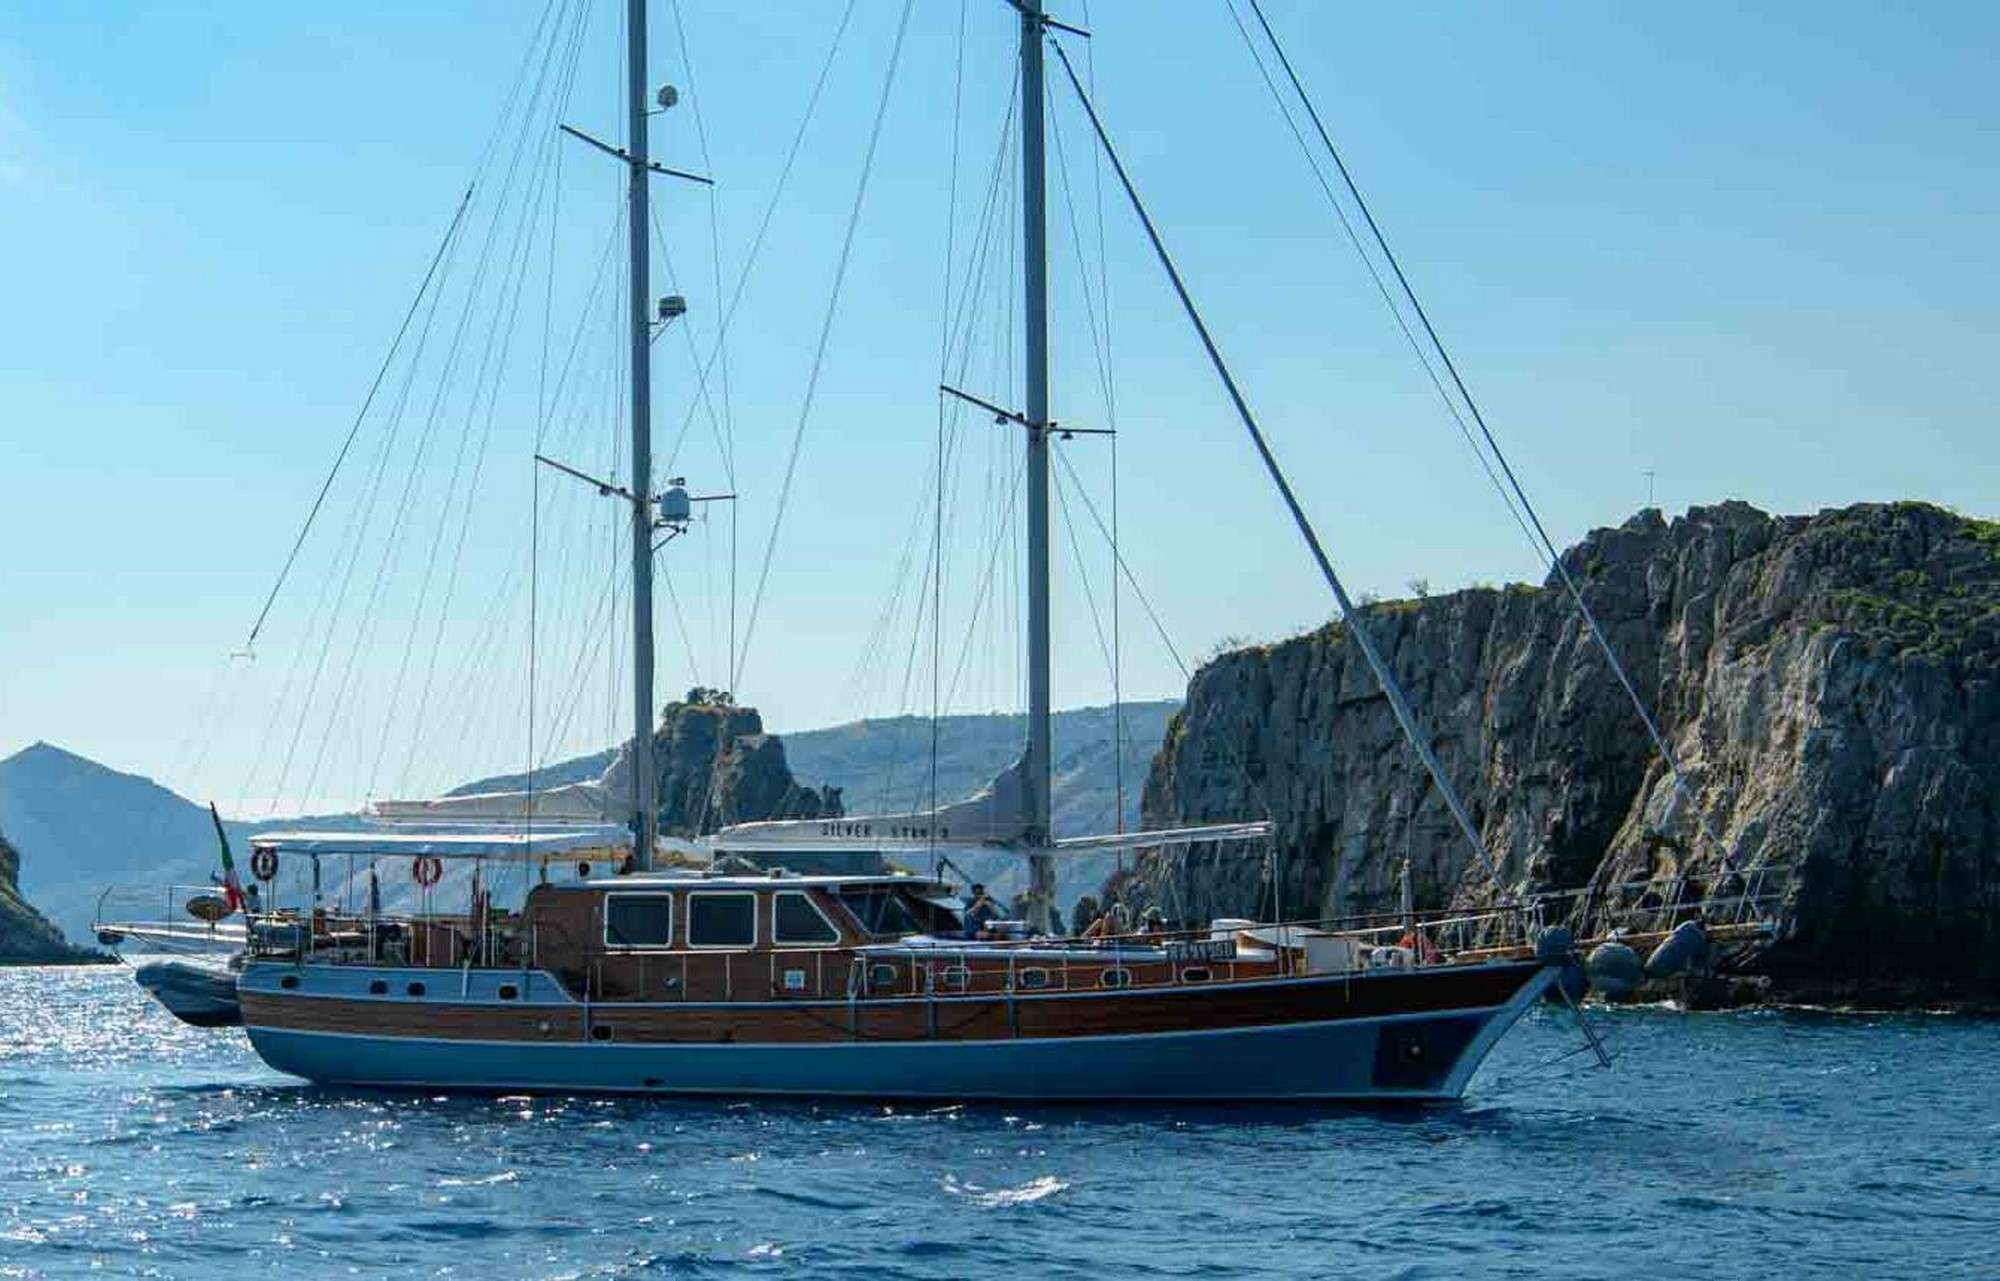 SILVER STAR 2 - Superyacht charter Sicily & Boat hire in Fr. Riviera & Tyrrhenian Sea 1